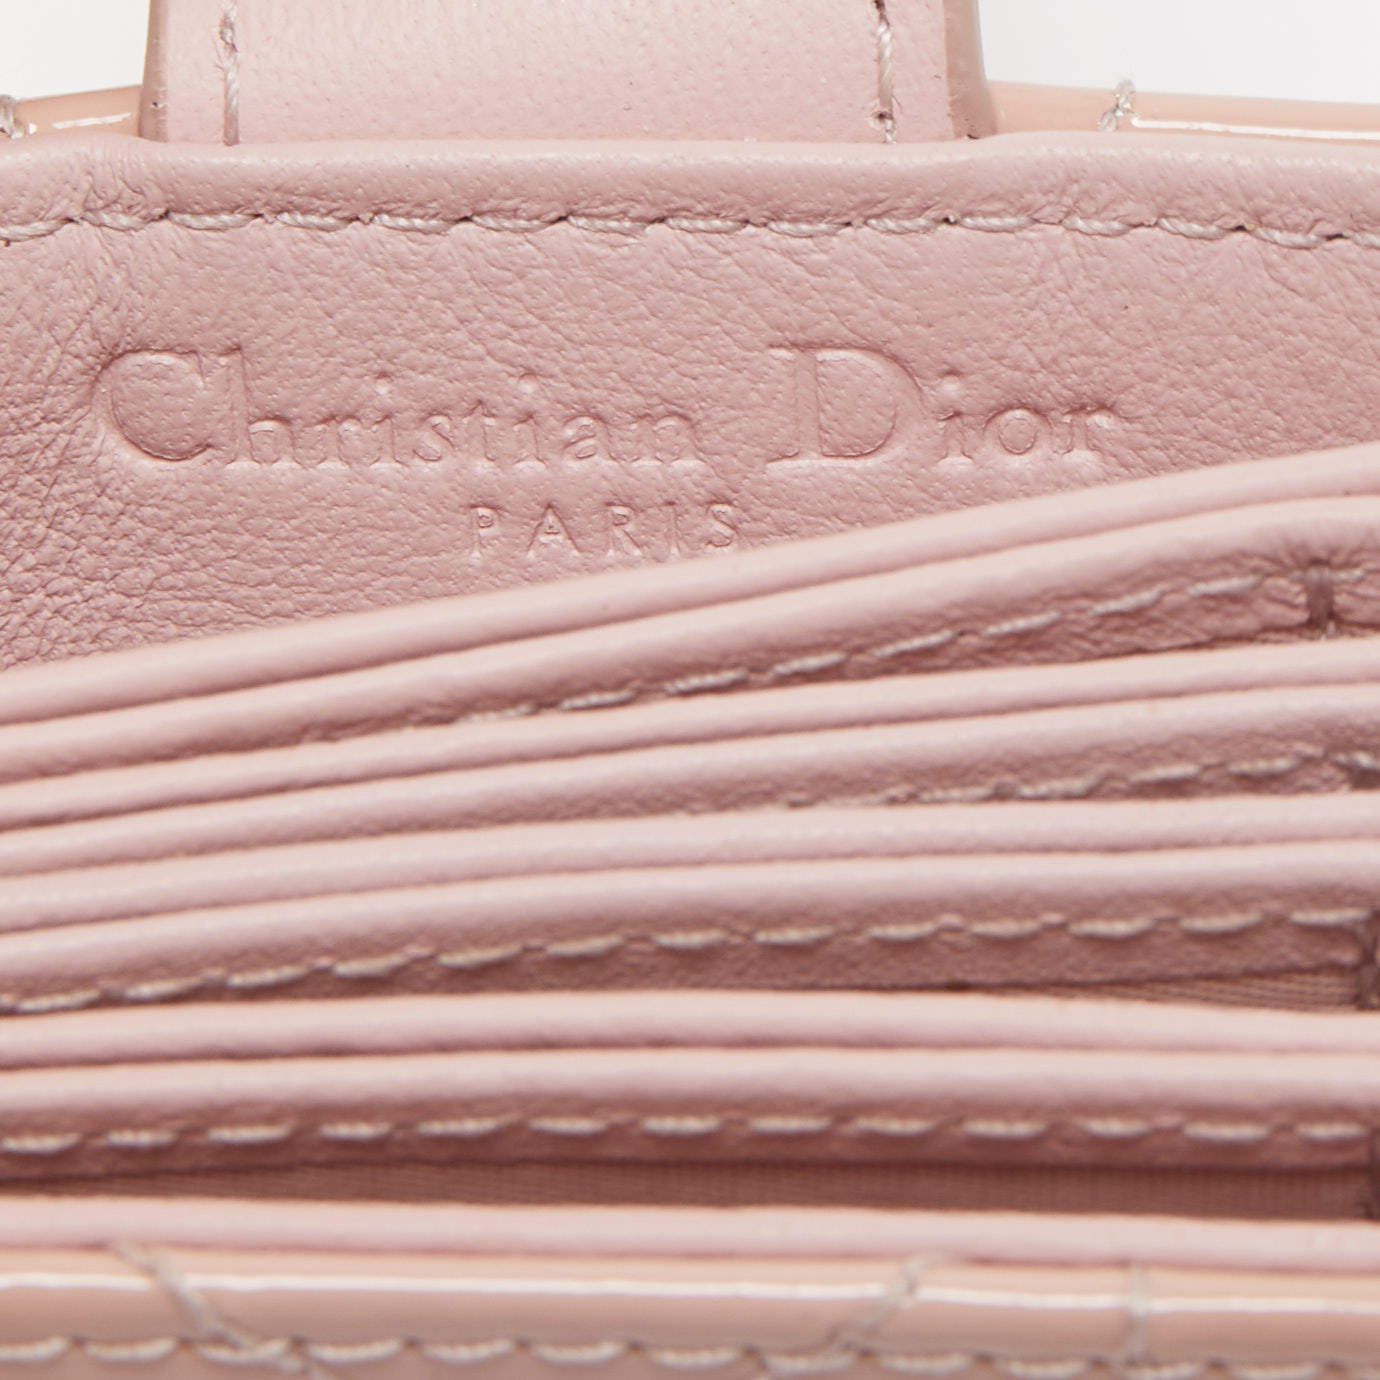 Dior 5 Gusset Card Holder in Pink Lambskin LGHW – Brands Lover